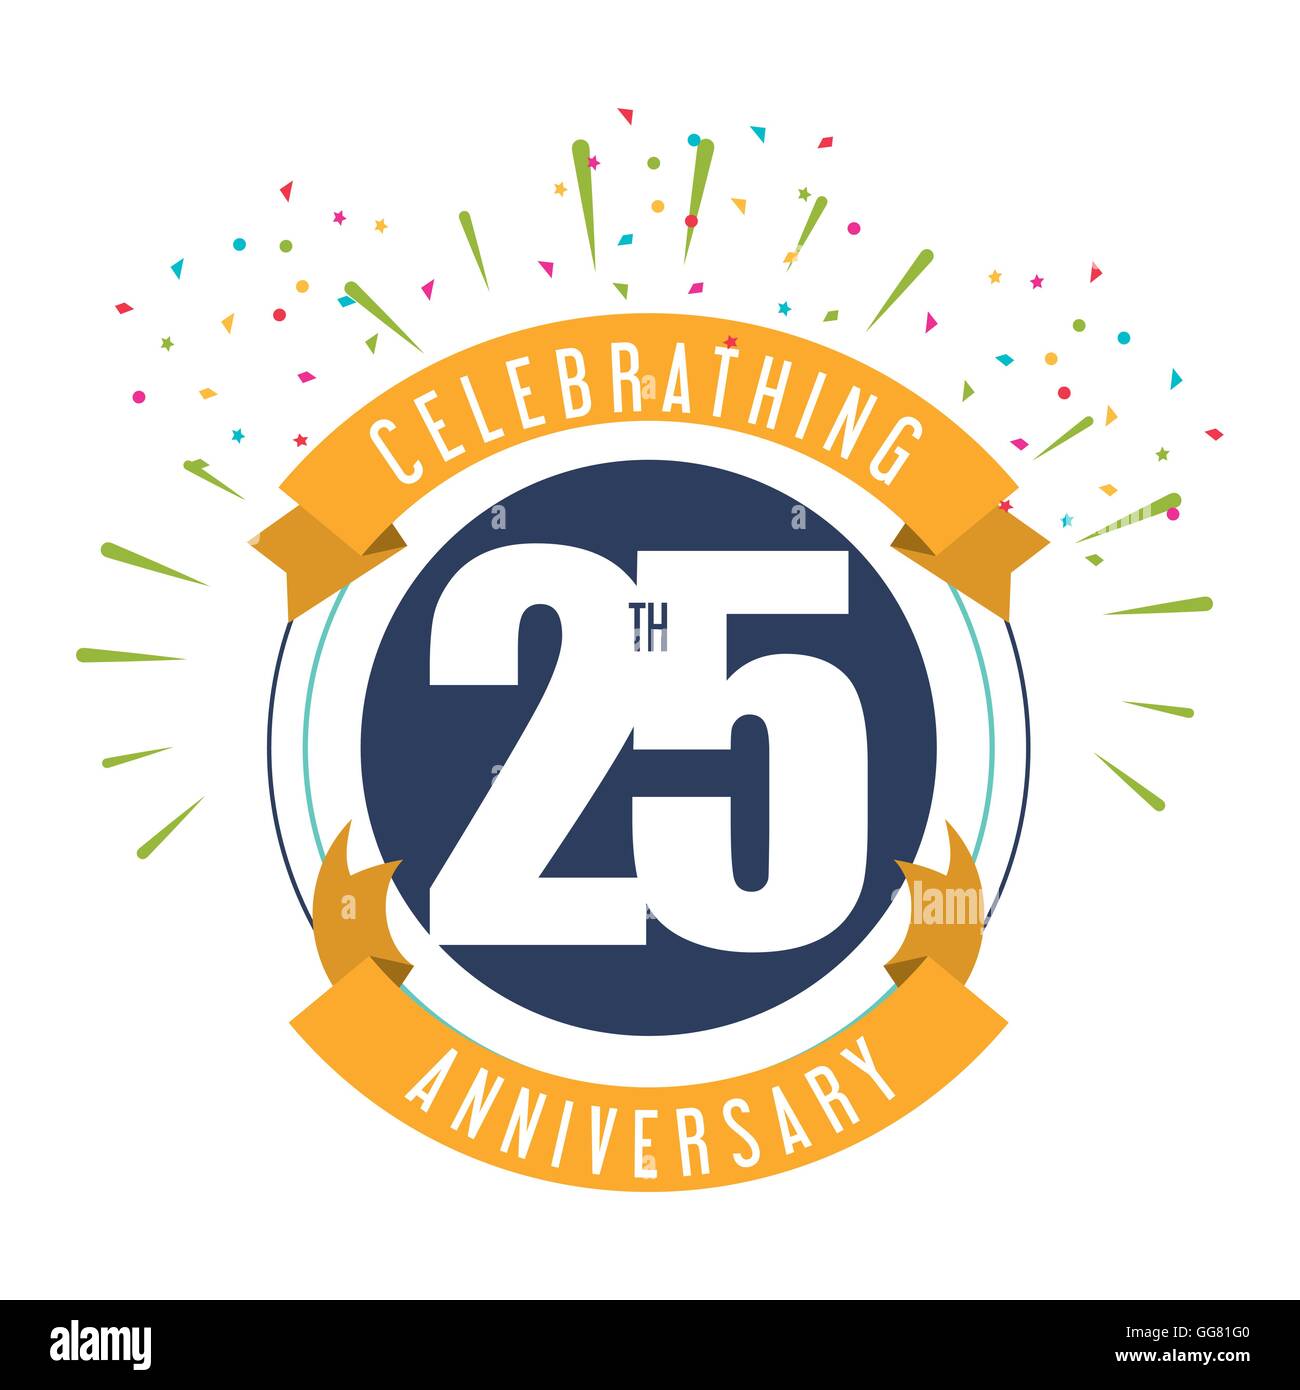 25 Year. Celebrating Anniversary. Vector graphic Stock Vector